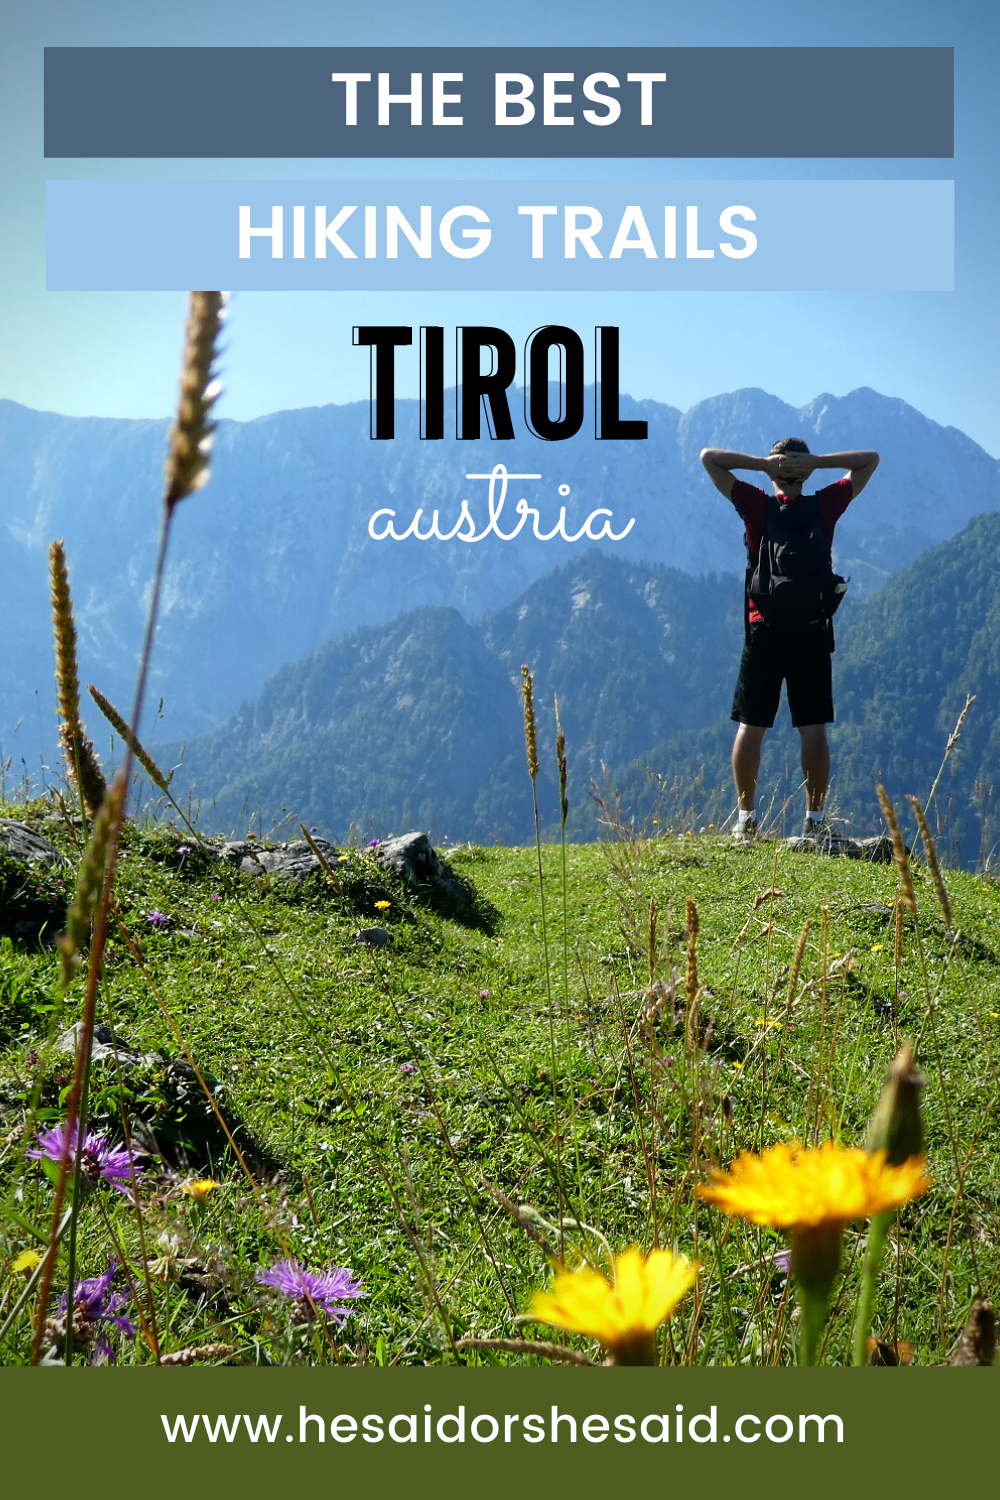 Best hiking trails in Tirol near Kufstein by hesaidorshesaid